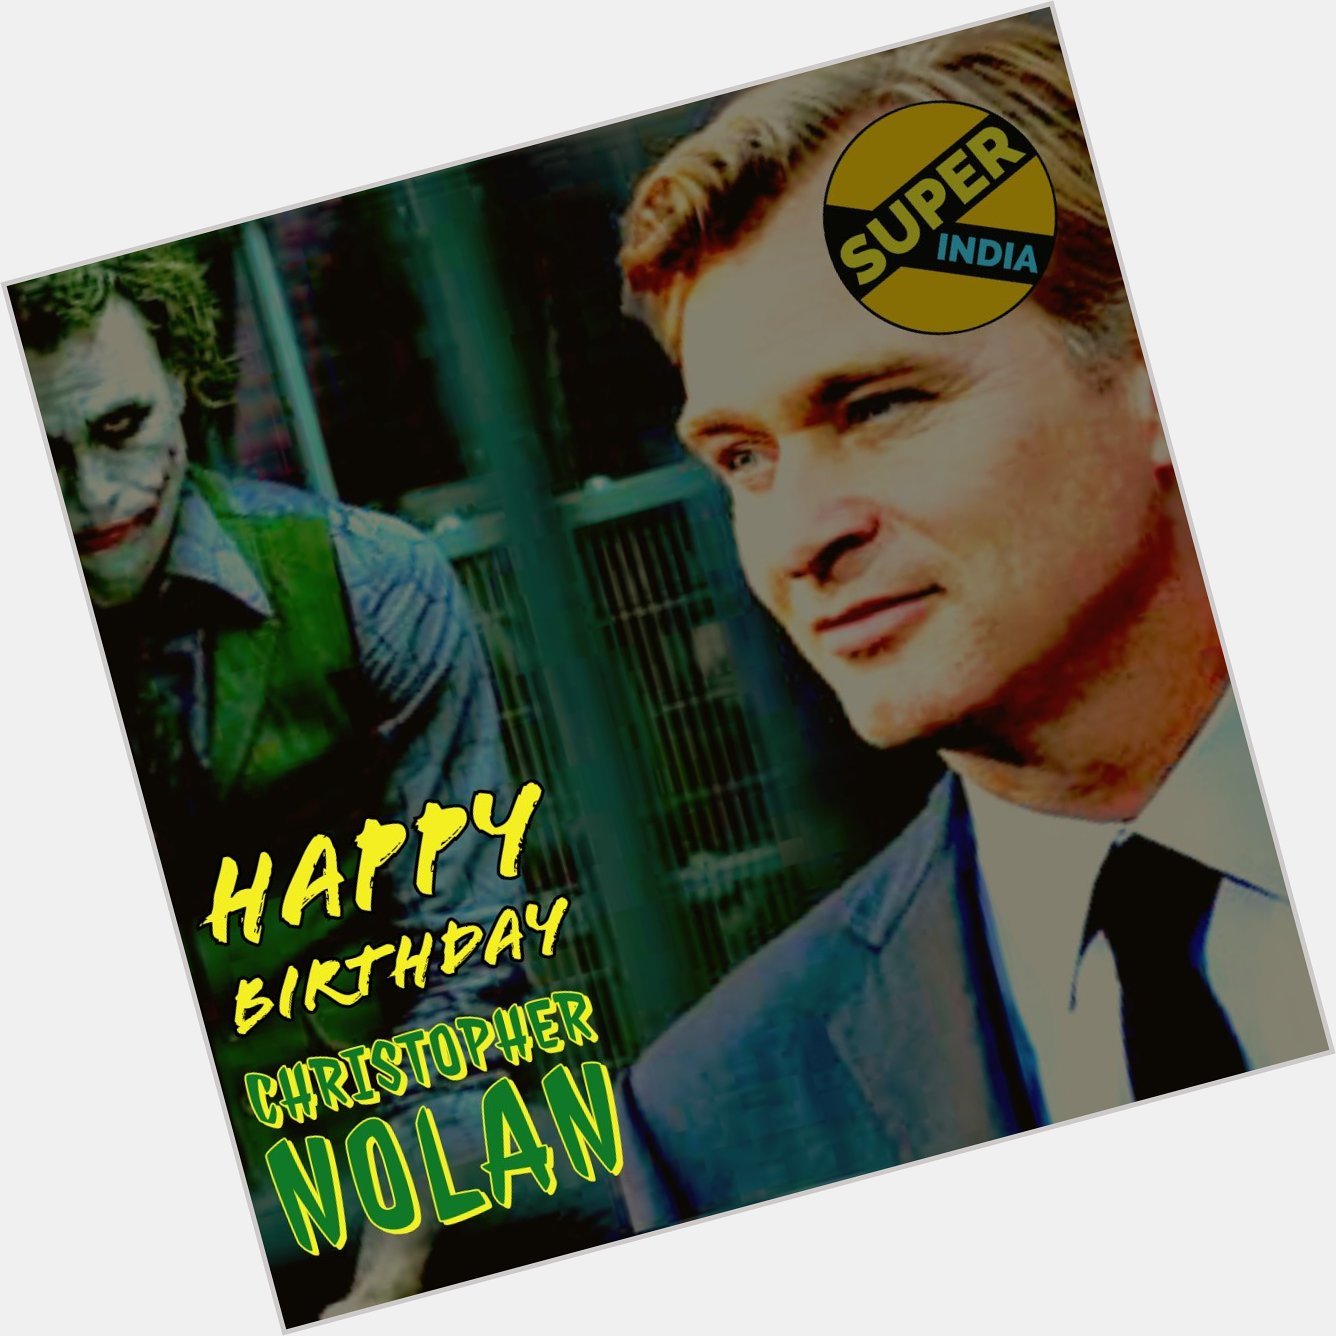 Happy Birthday Christopher Nolan 
Director of 